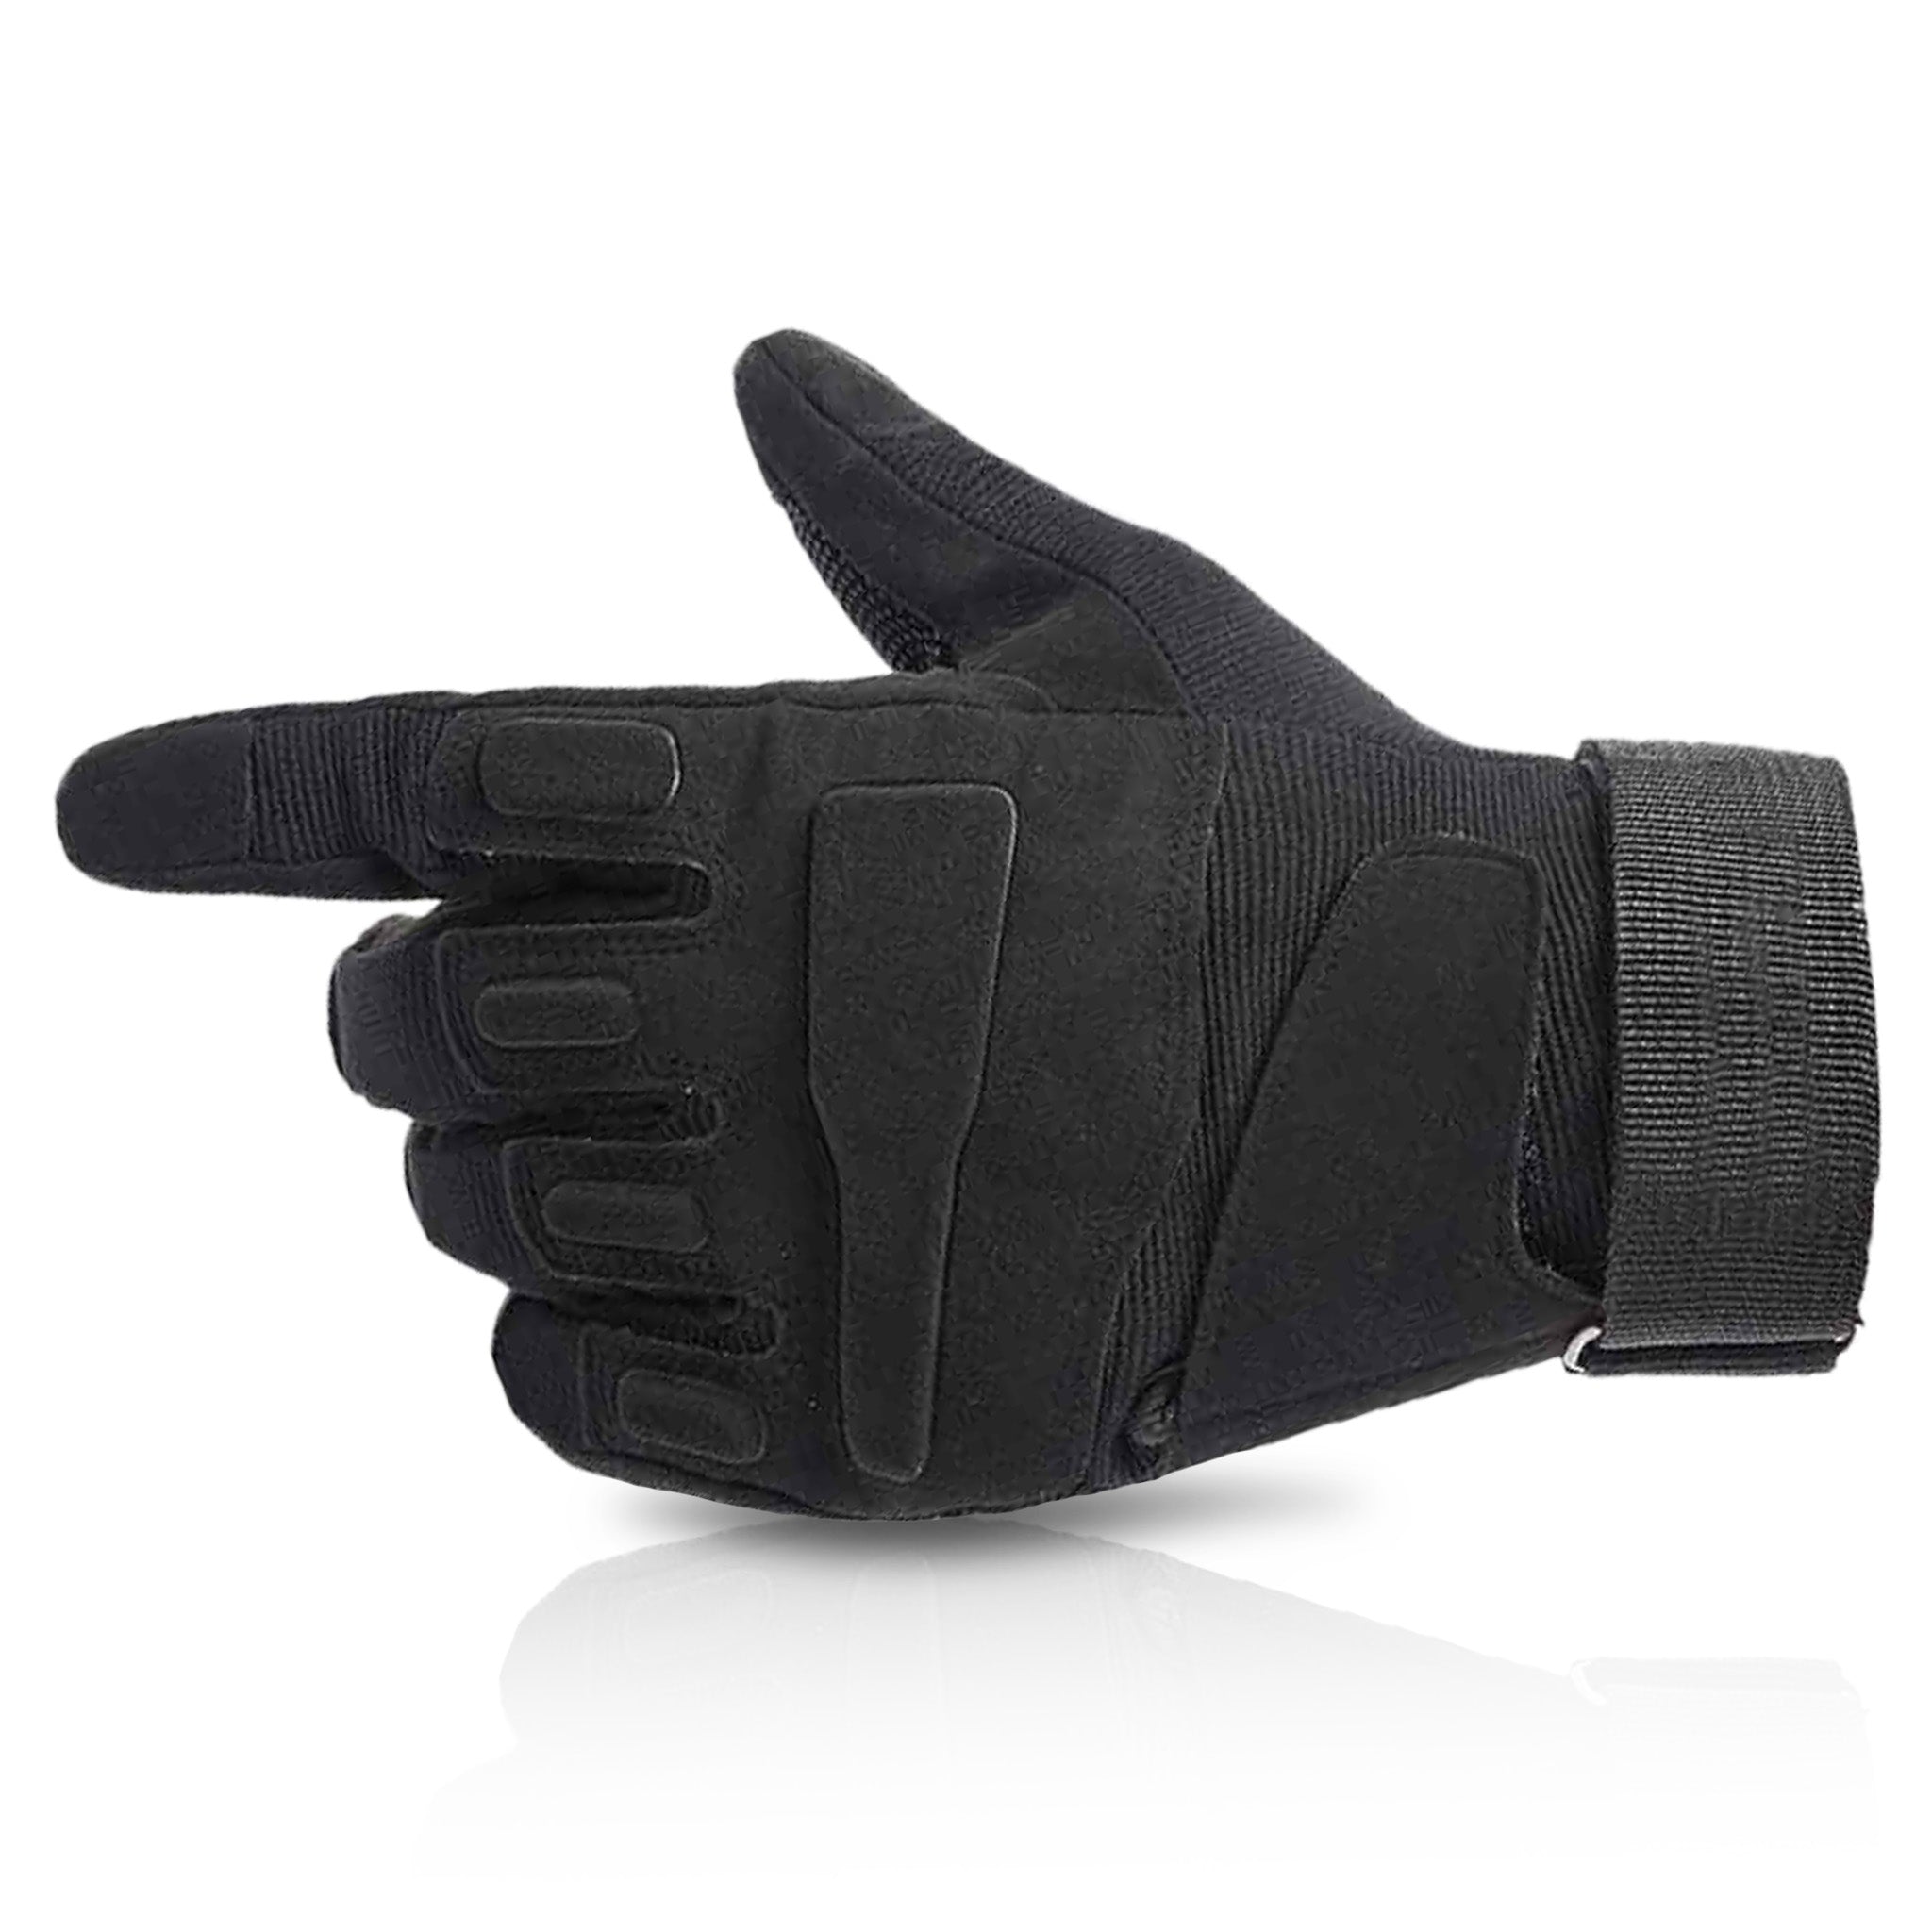 Floridus - Cut Resistant Tactical Gloves | Outdoor Military Gloves | Tactical Gloves